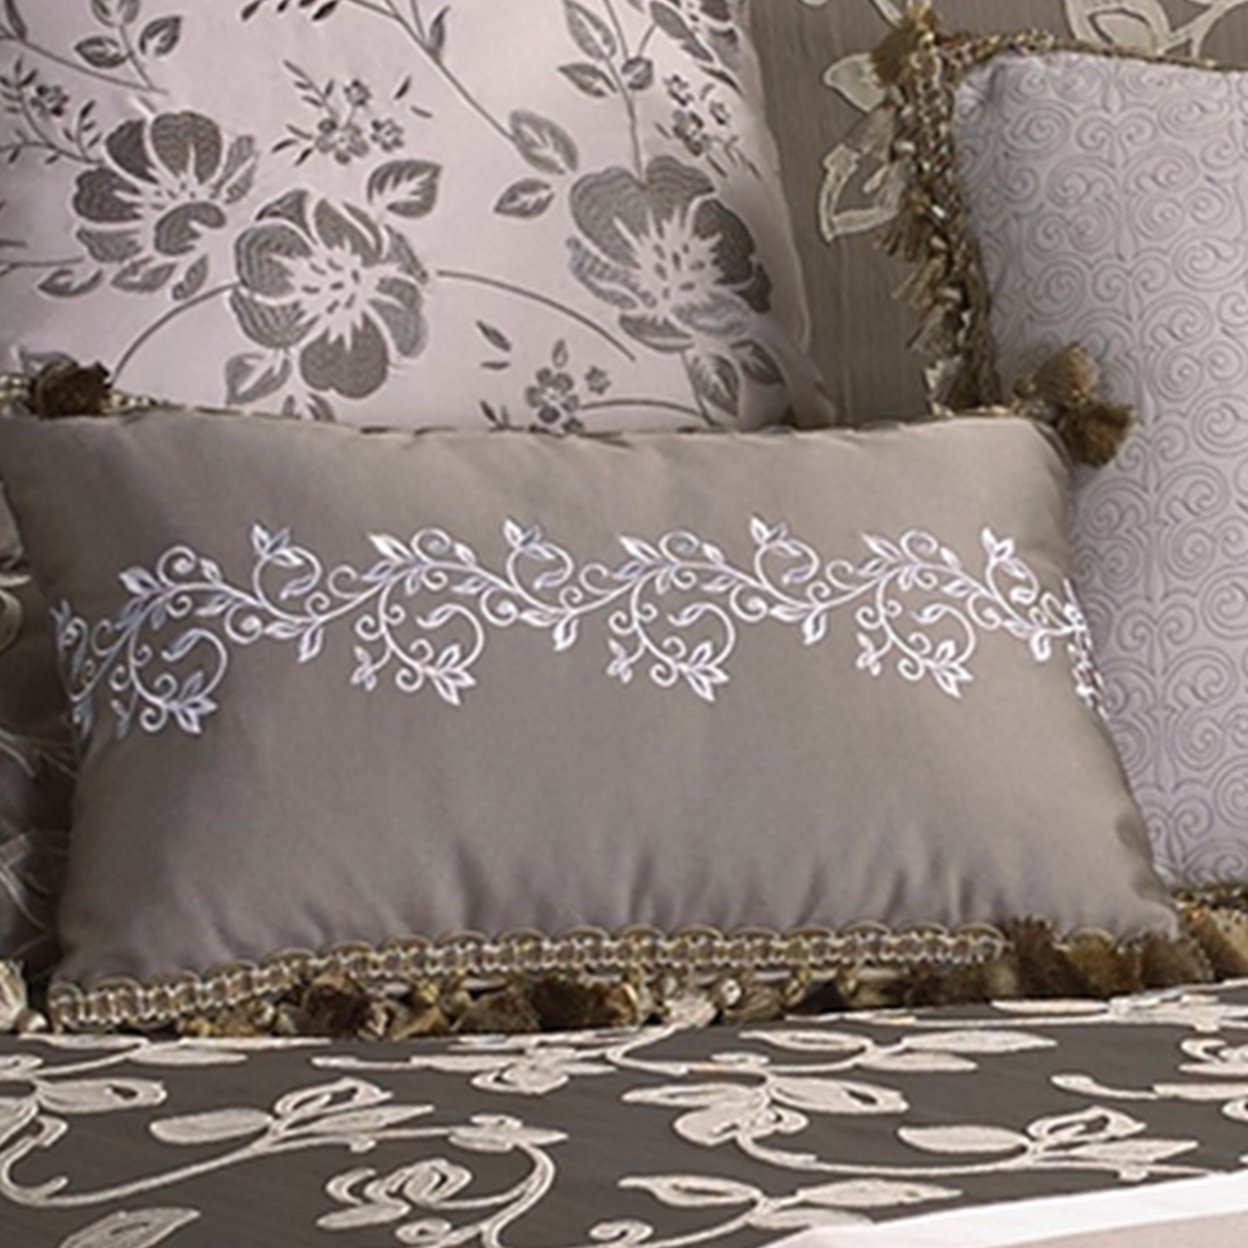 9 Piece Queen Polyester Comforter Set With Leaf Print, Platinum Gray- Saltoro Sherpi